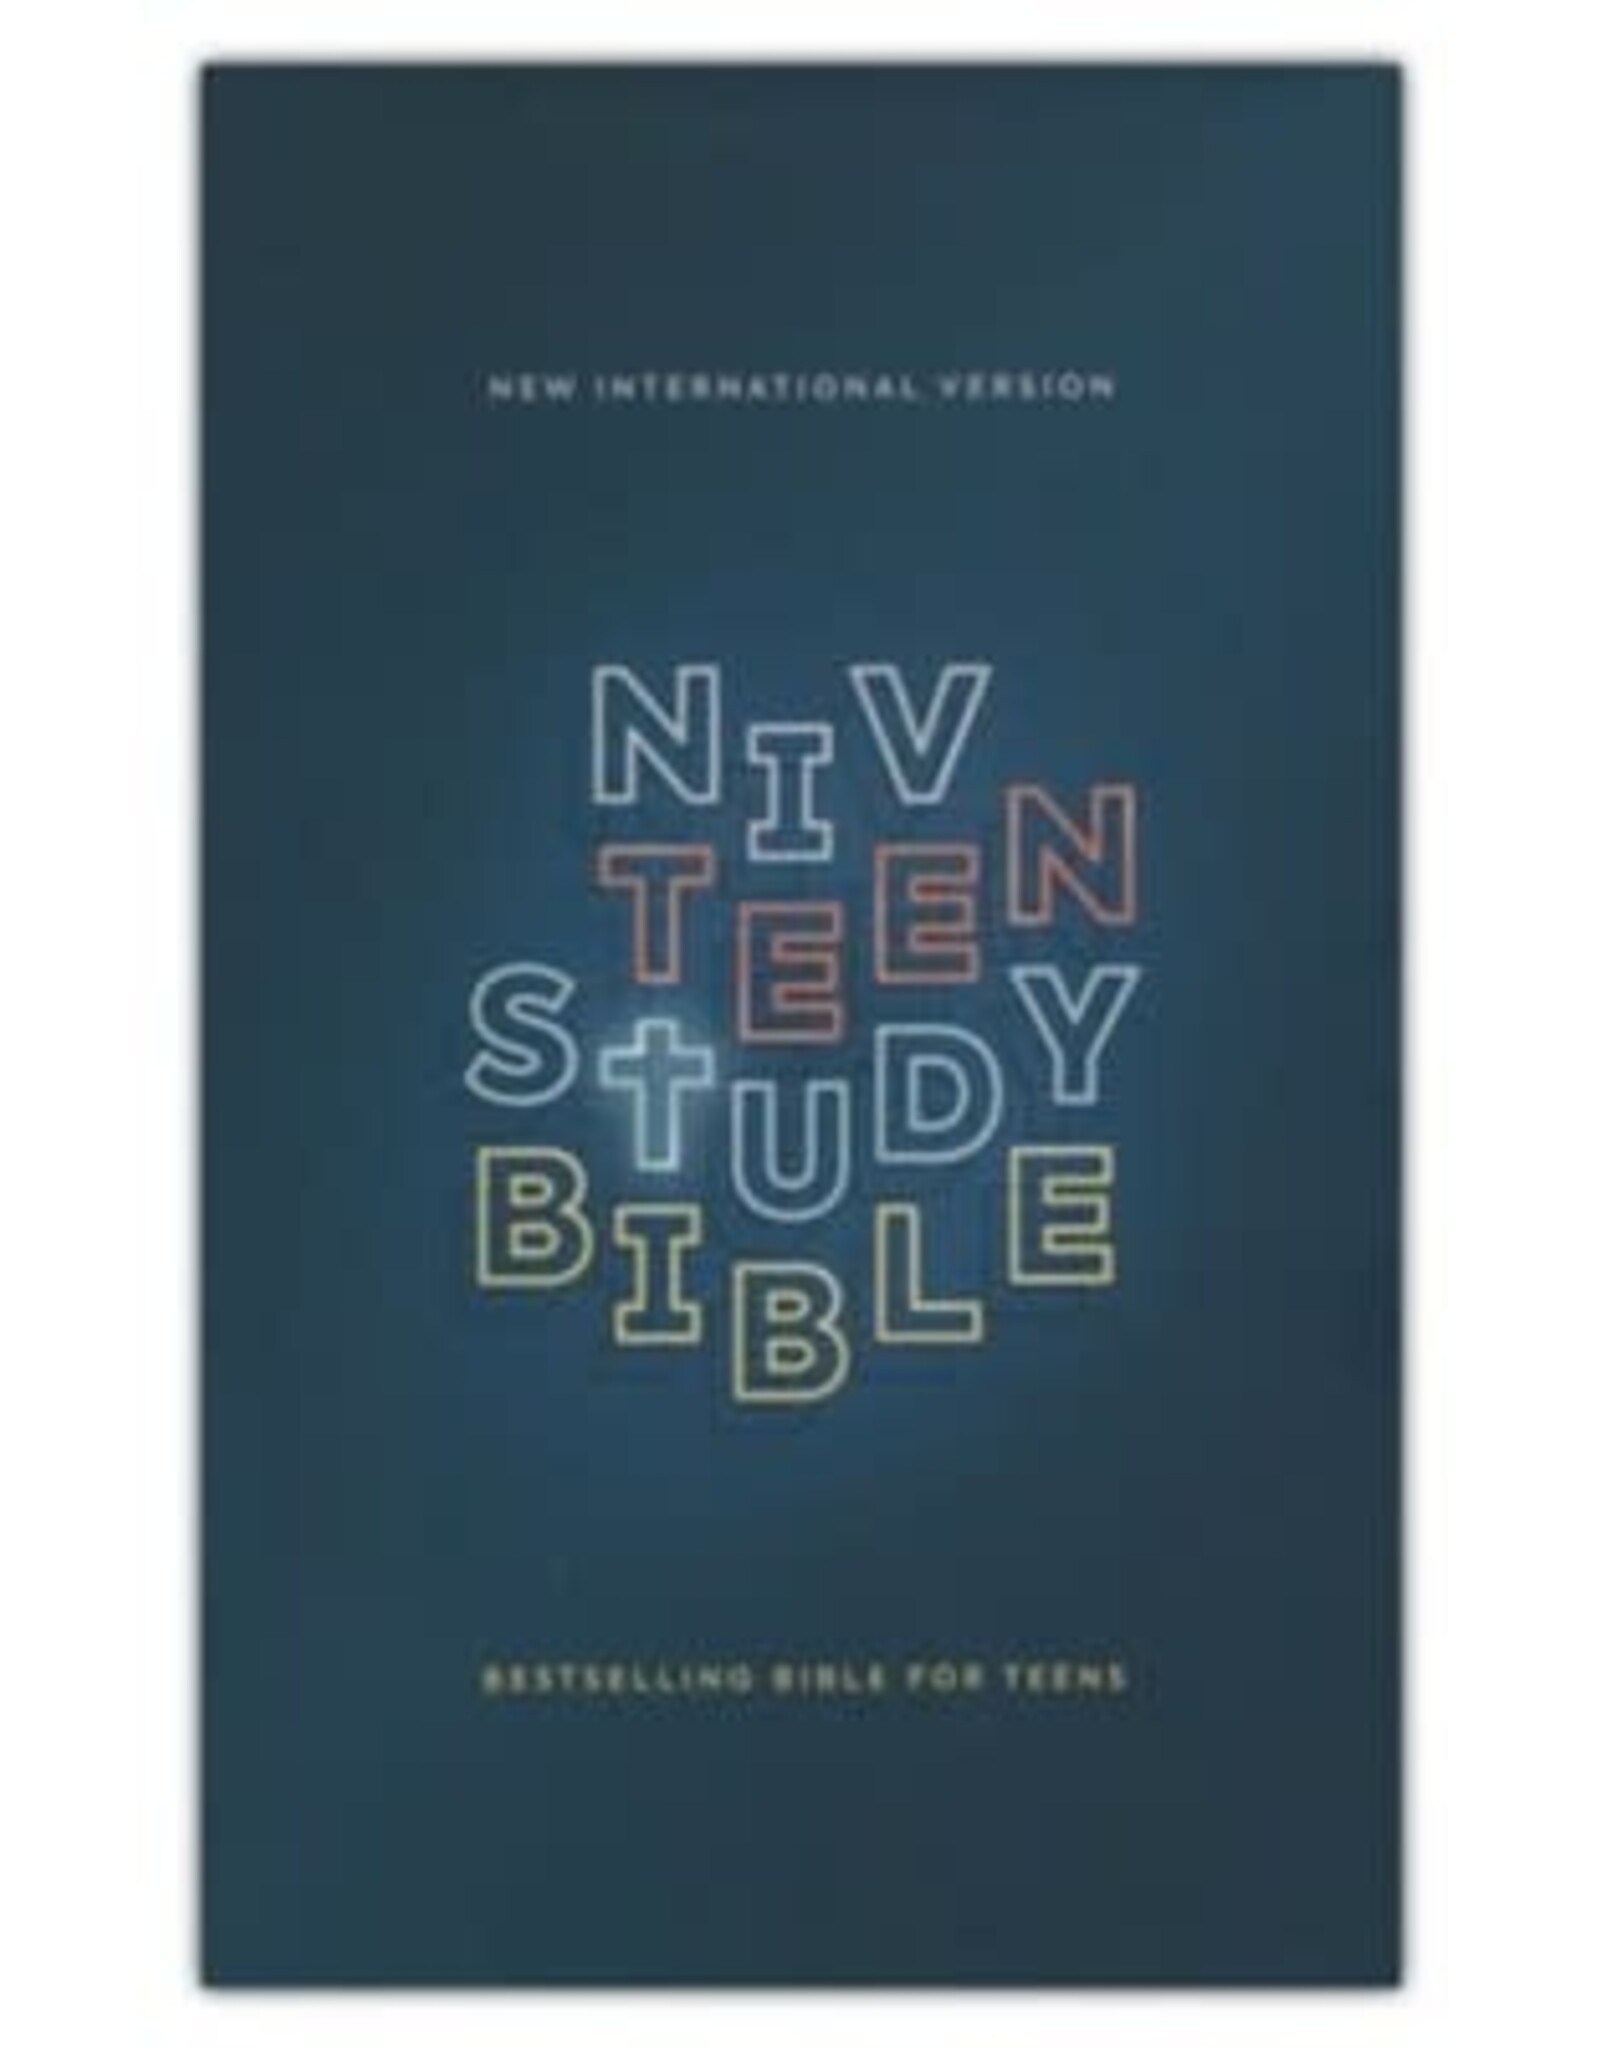 NIV Teen Study Bible - Hardcover